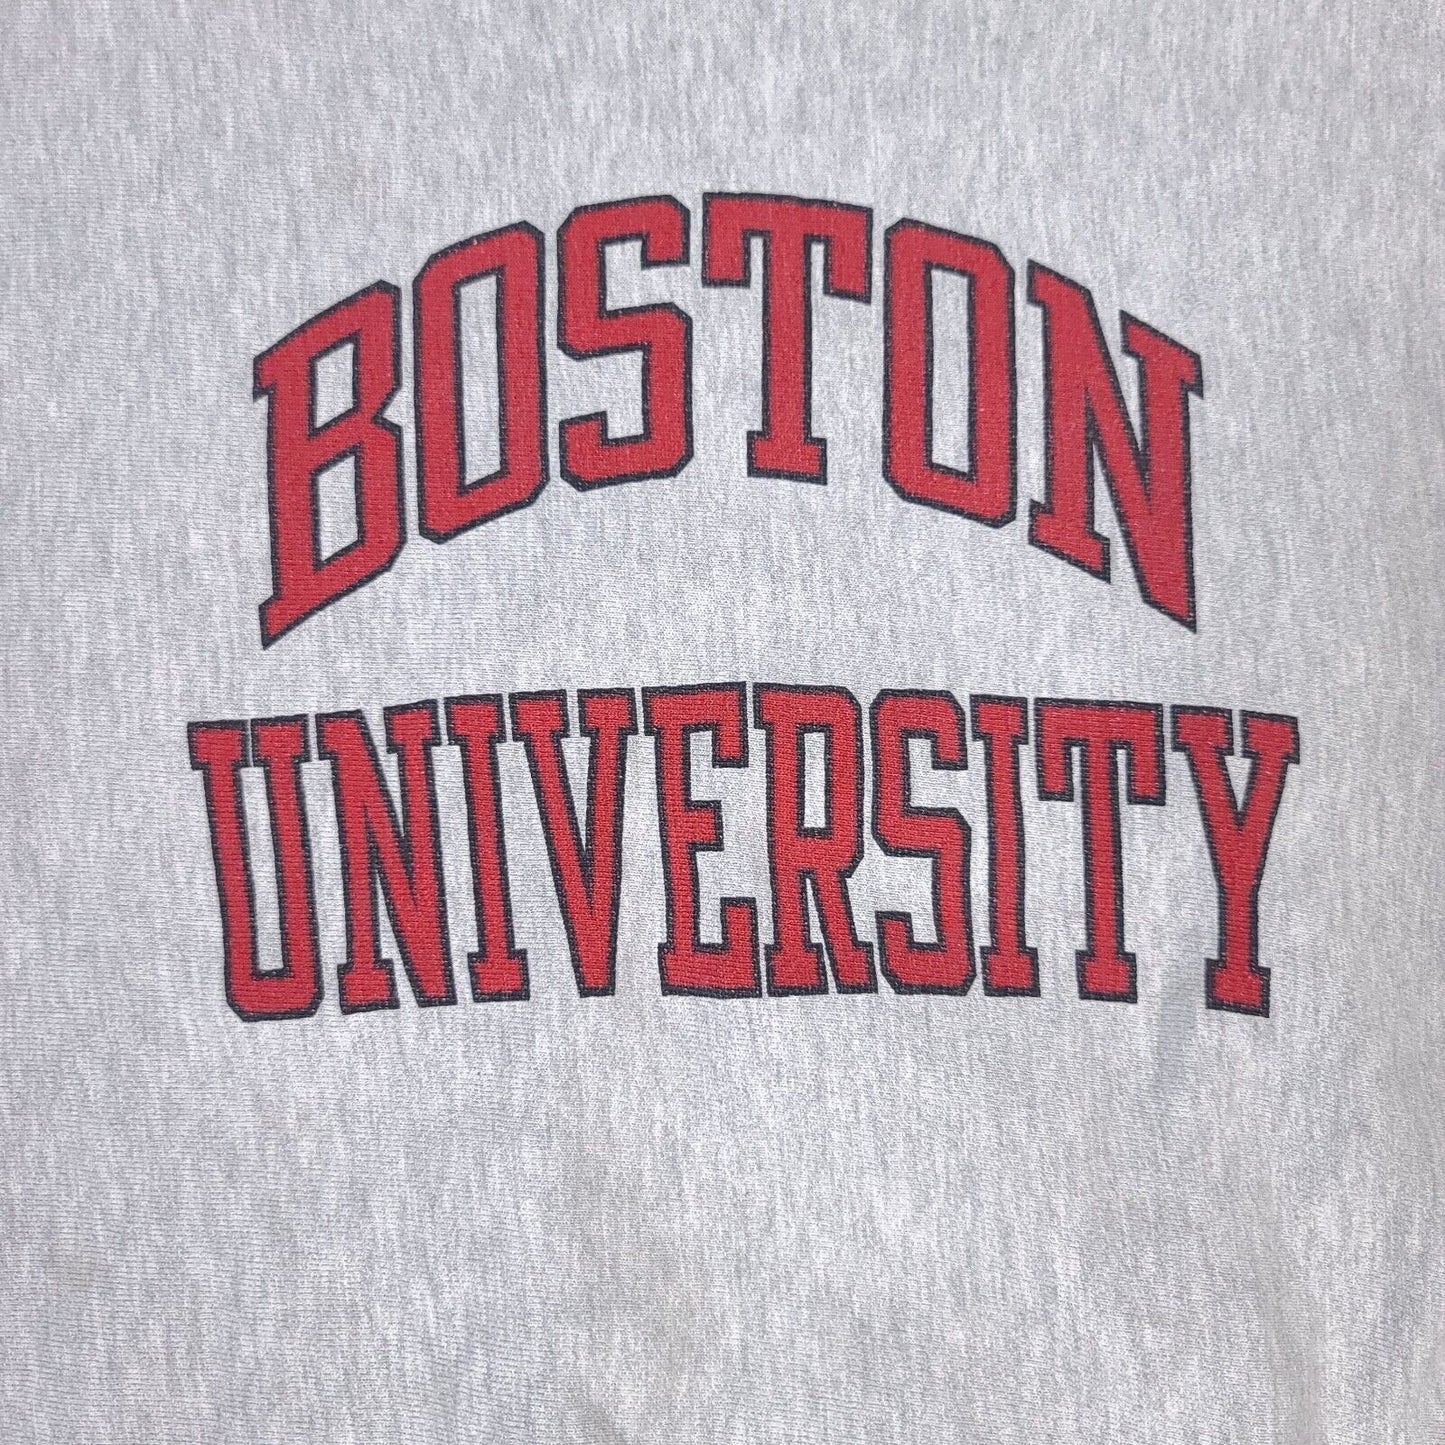 Vintage Boston College Gray Champion Reverse Weave Sweatshirt